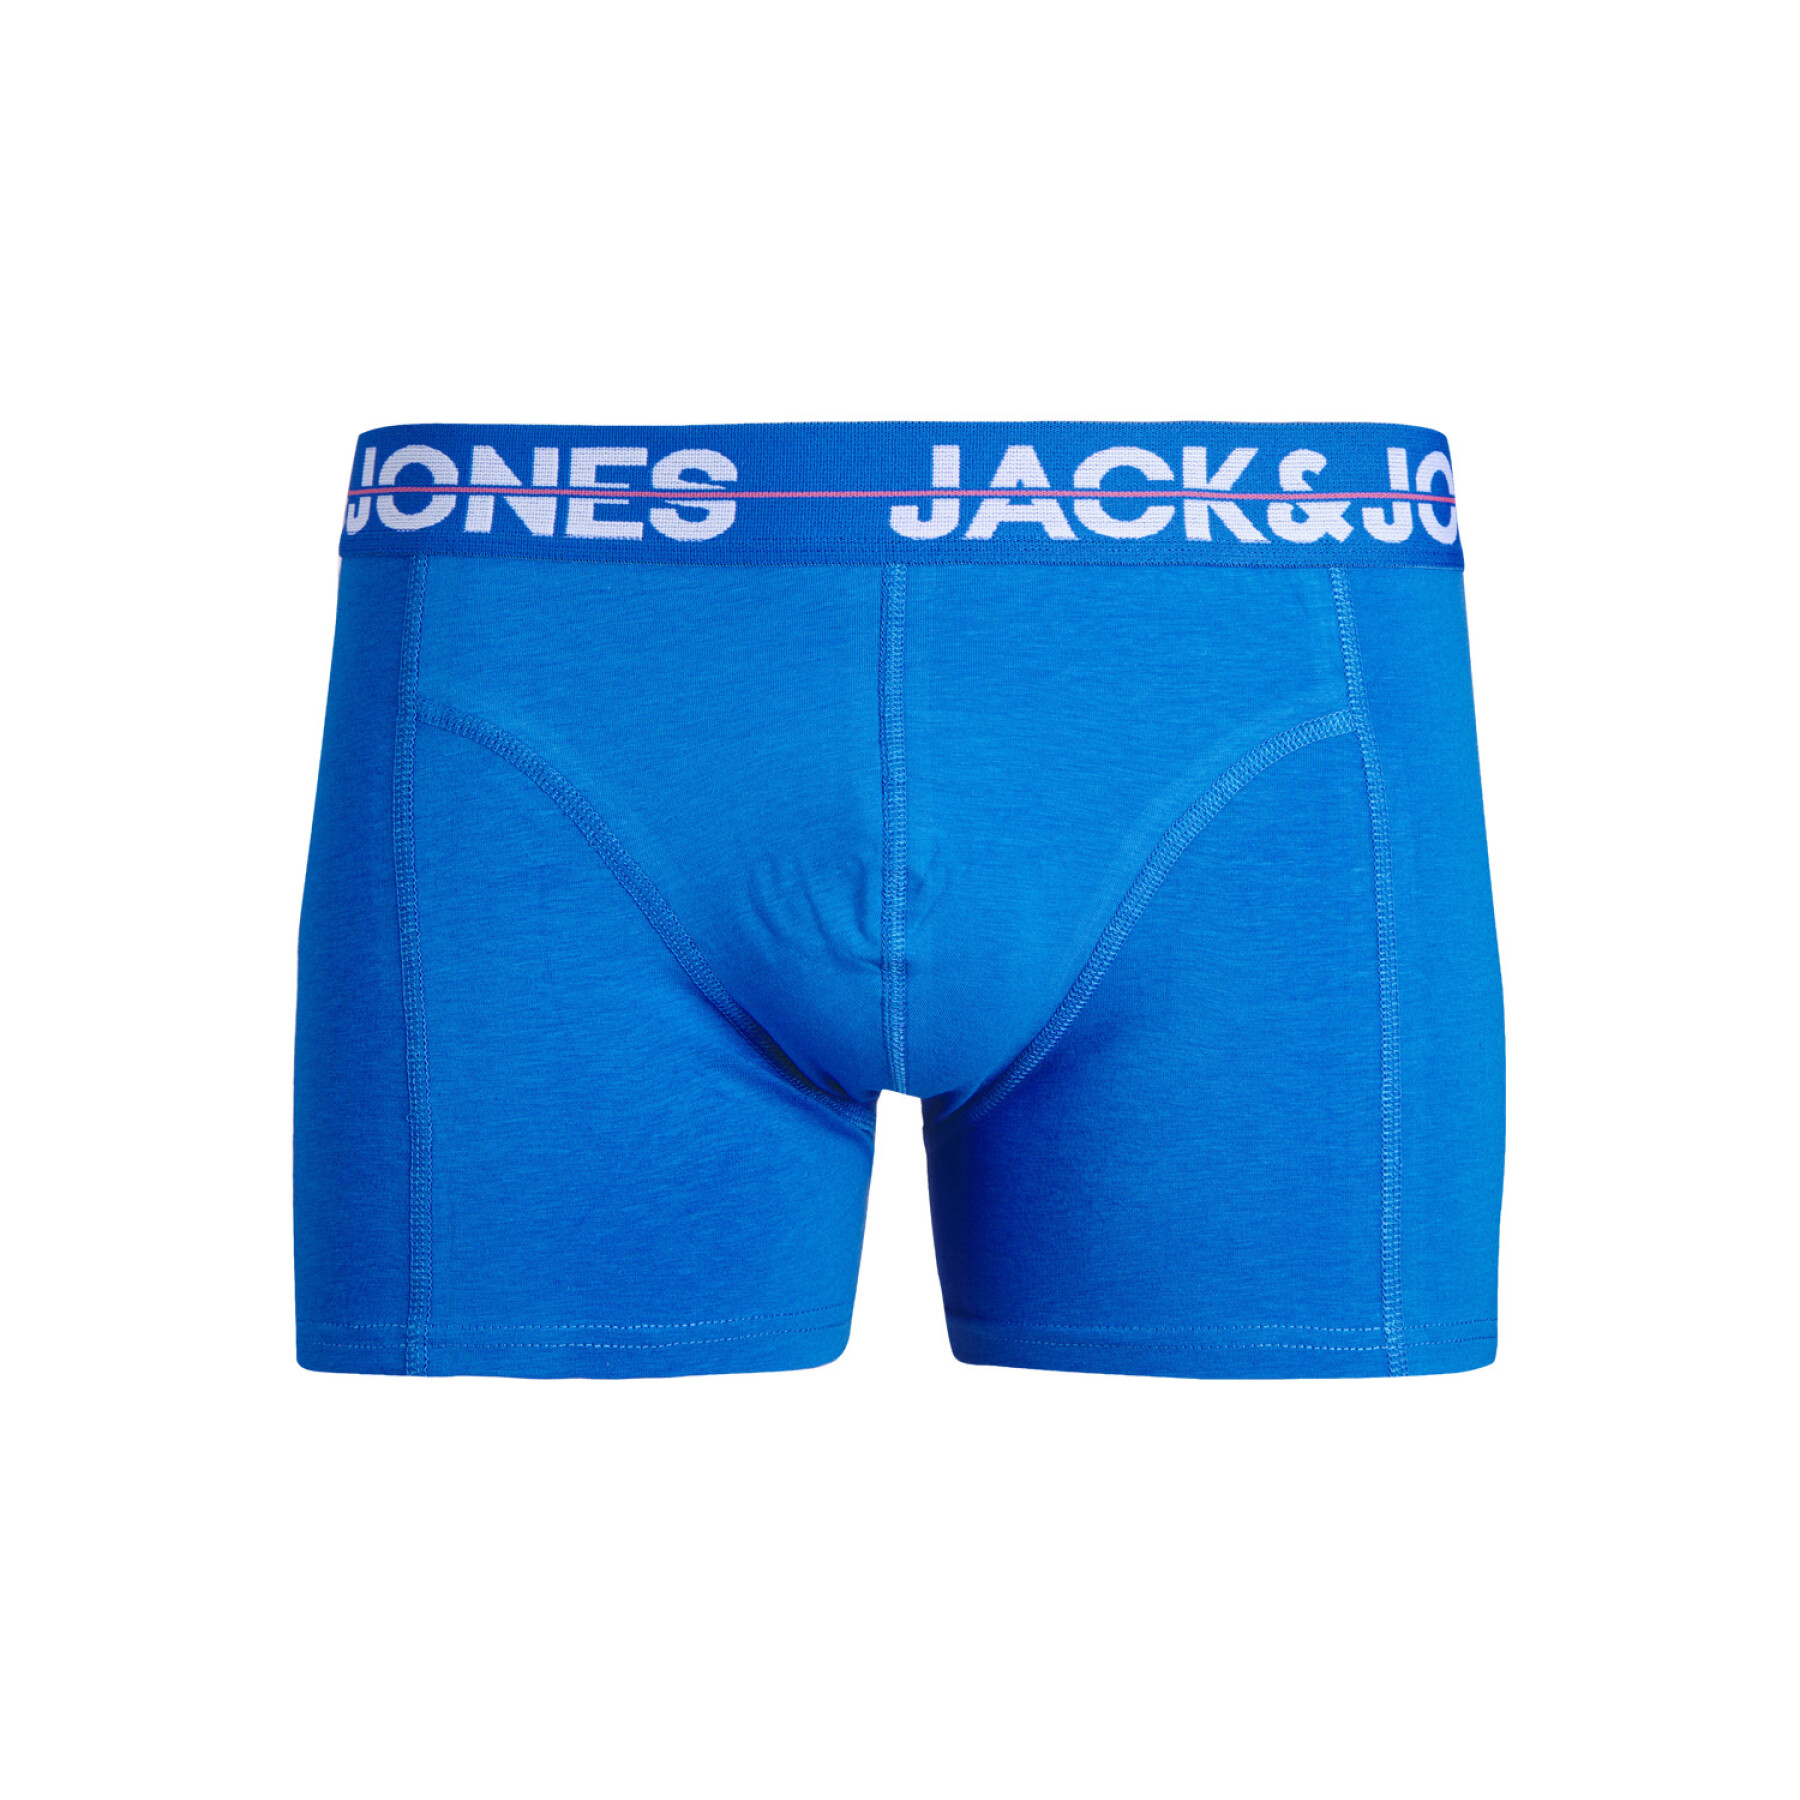 Calções boxer Jack & Jones Pineapple (x3)